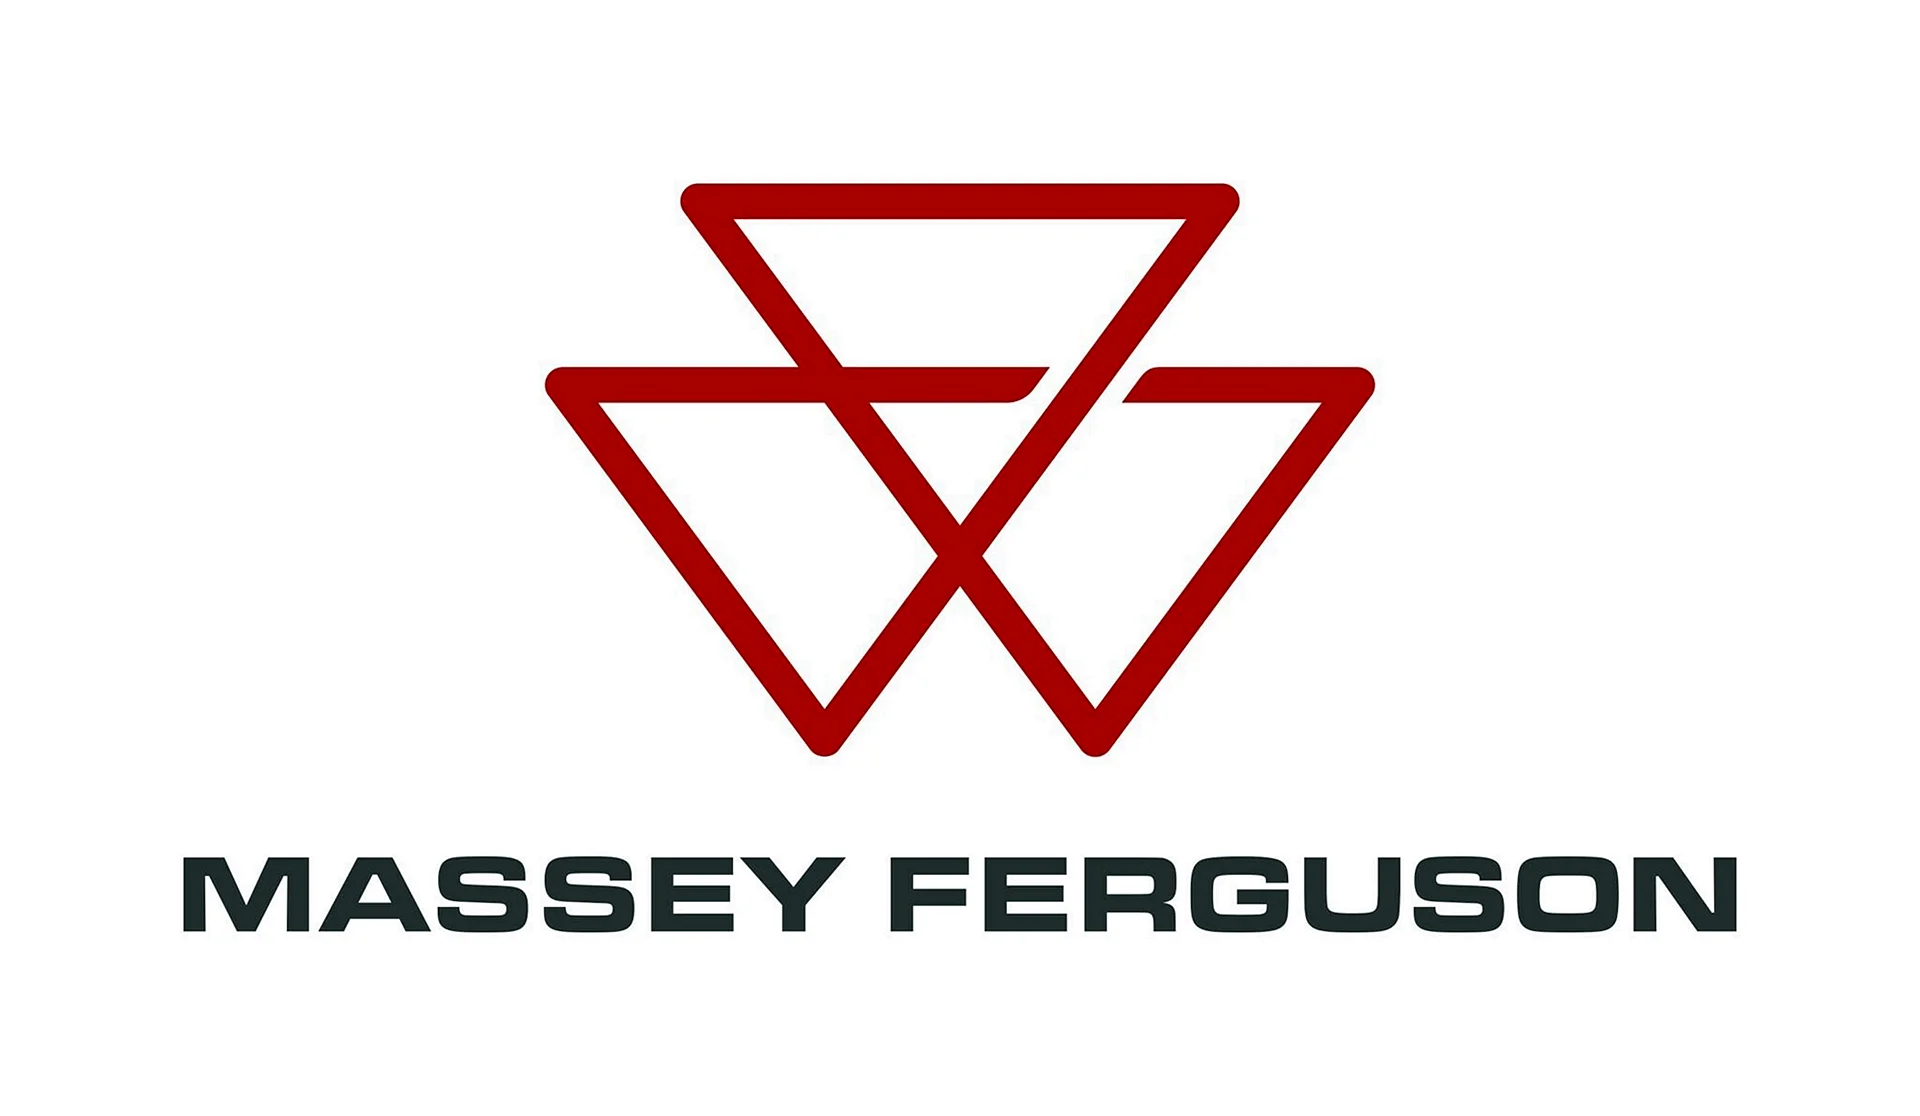 Massey Ferguson Logo Wallpaper